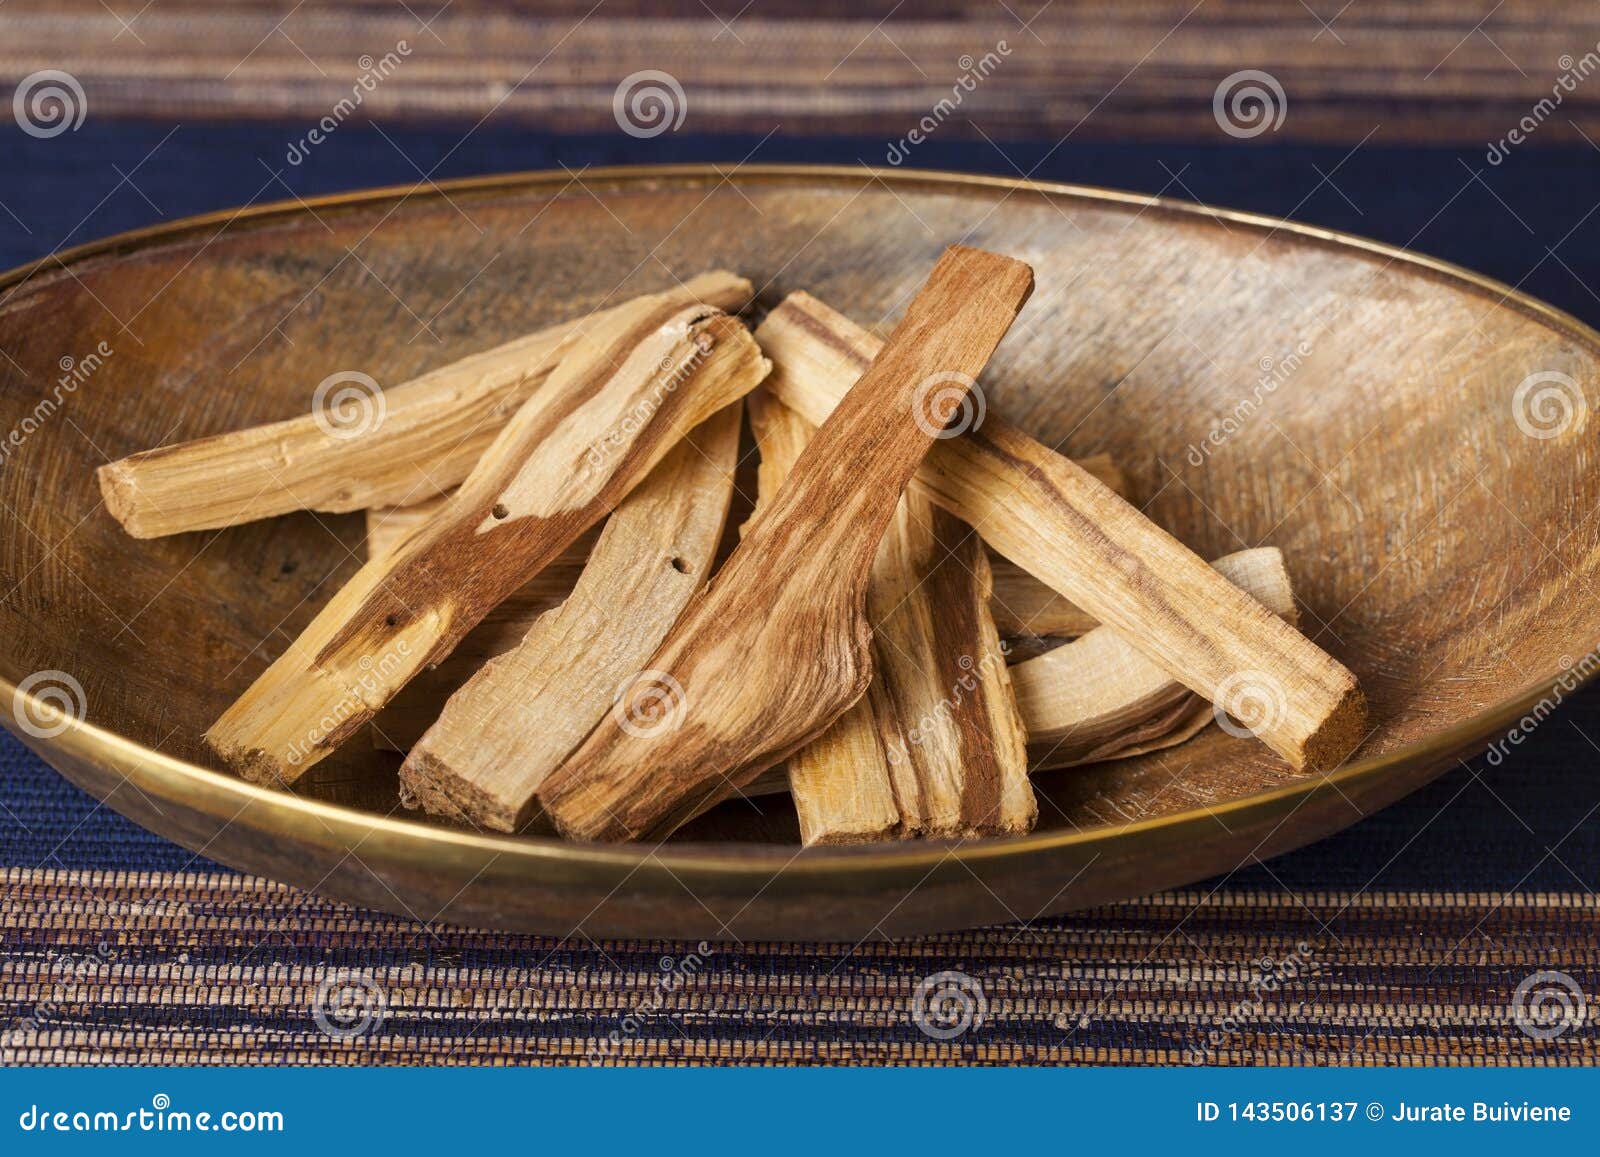 bursera graveolens, known in spanish as palo santo `holy wood`